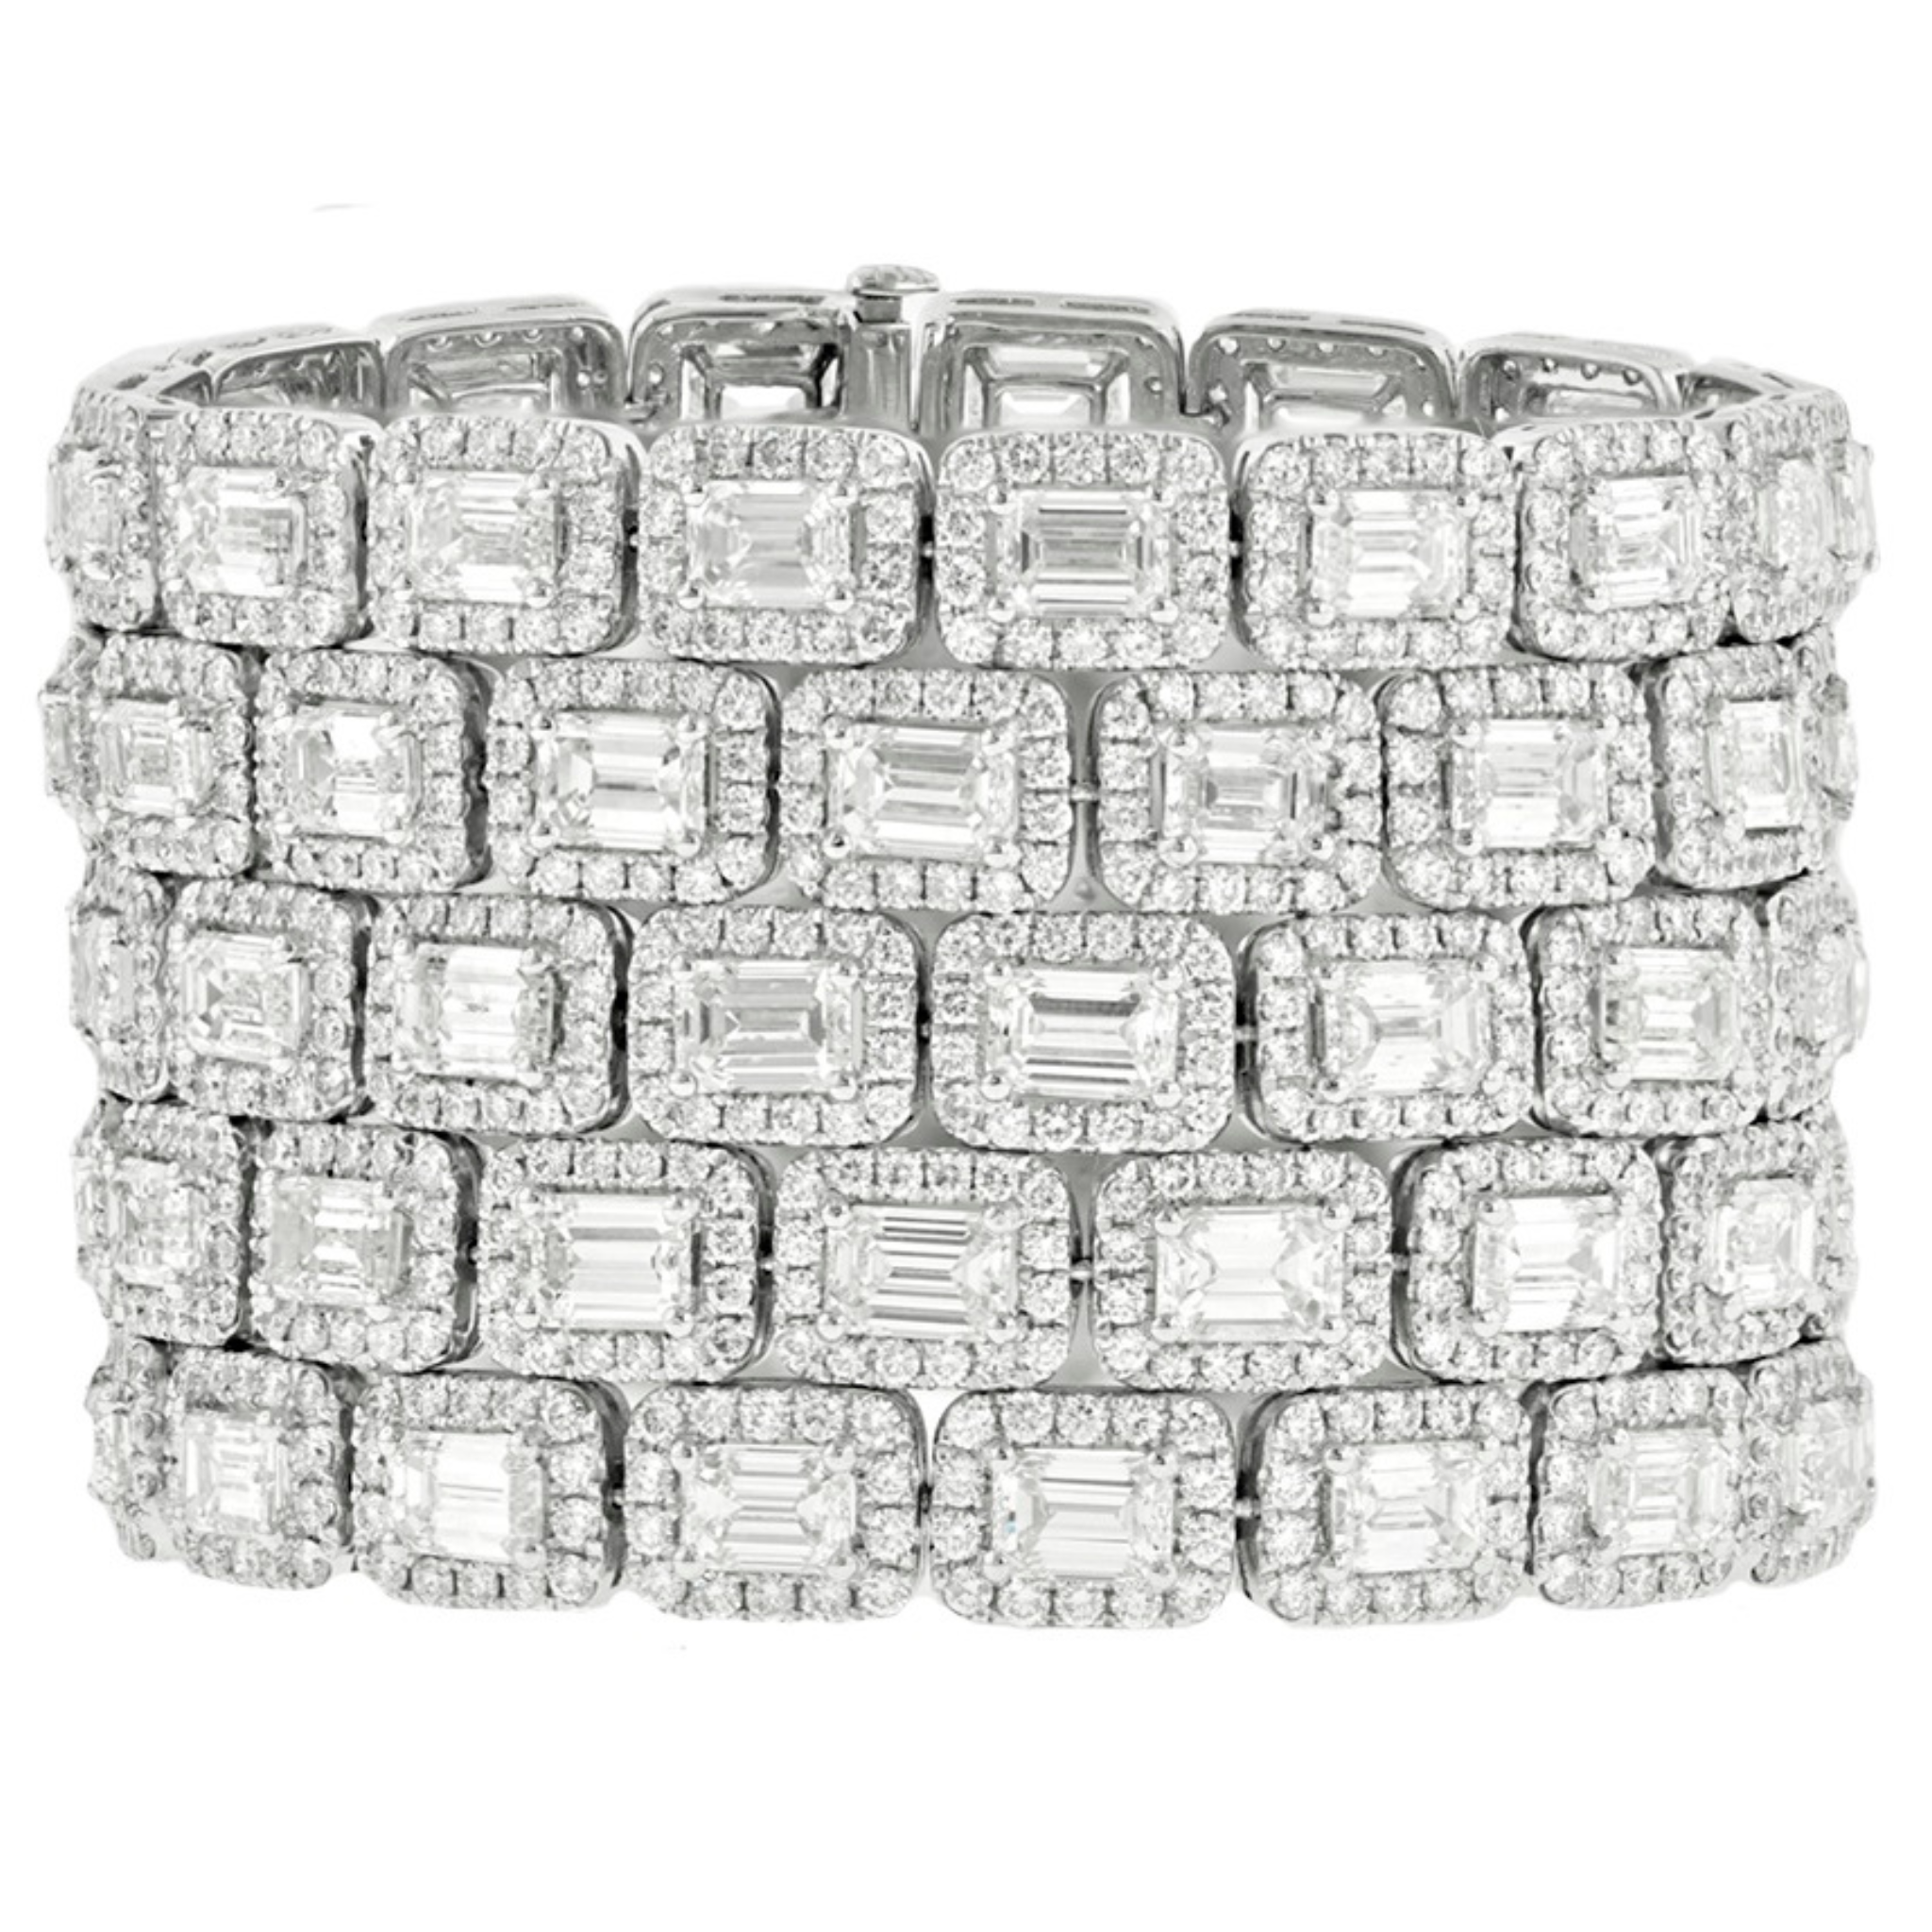 5 Row Emerald Diamond Bracelet.jpg